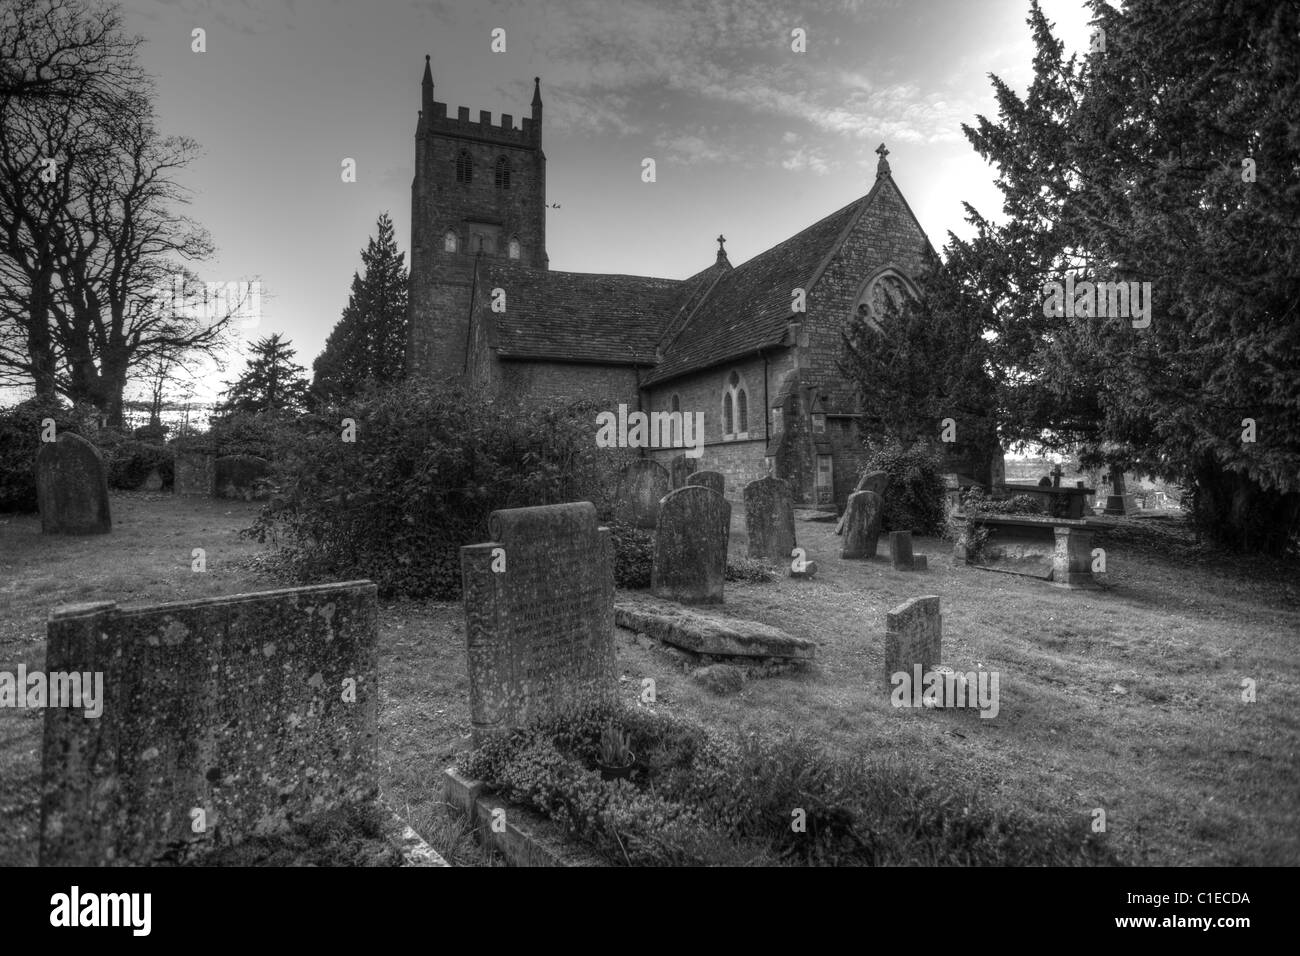 Santa Maria Vergine chiesa, St Briavels, Foresta di Dean, UK. Foto Stock